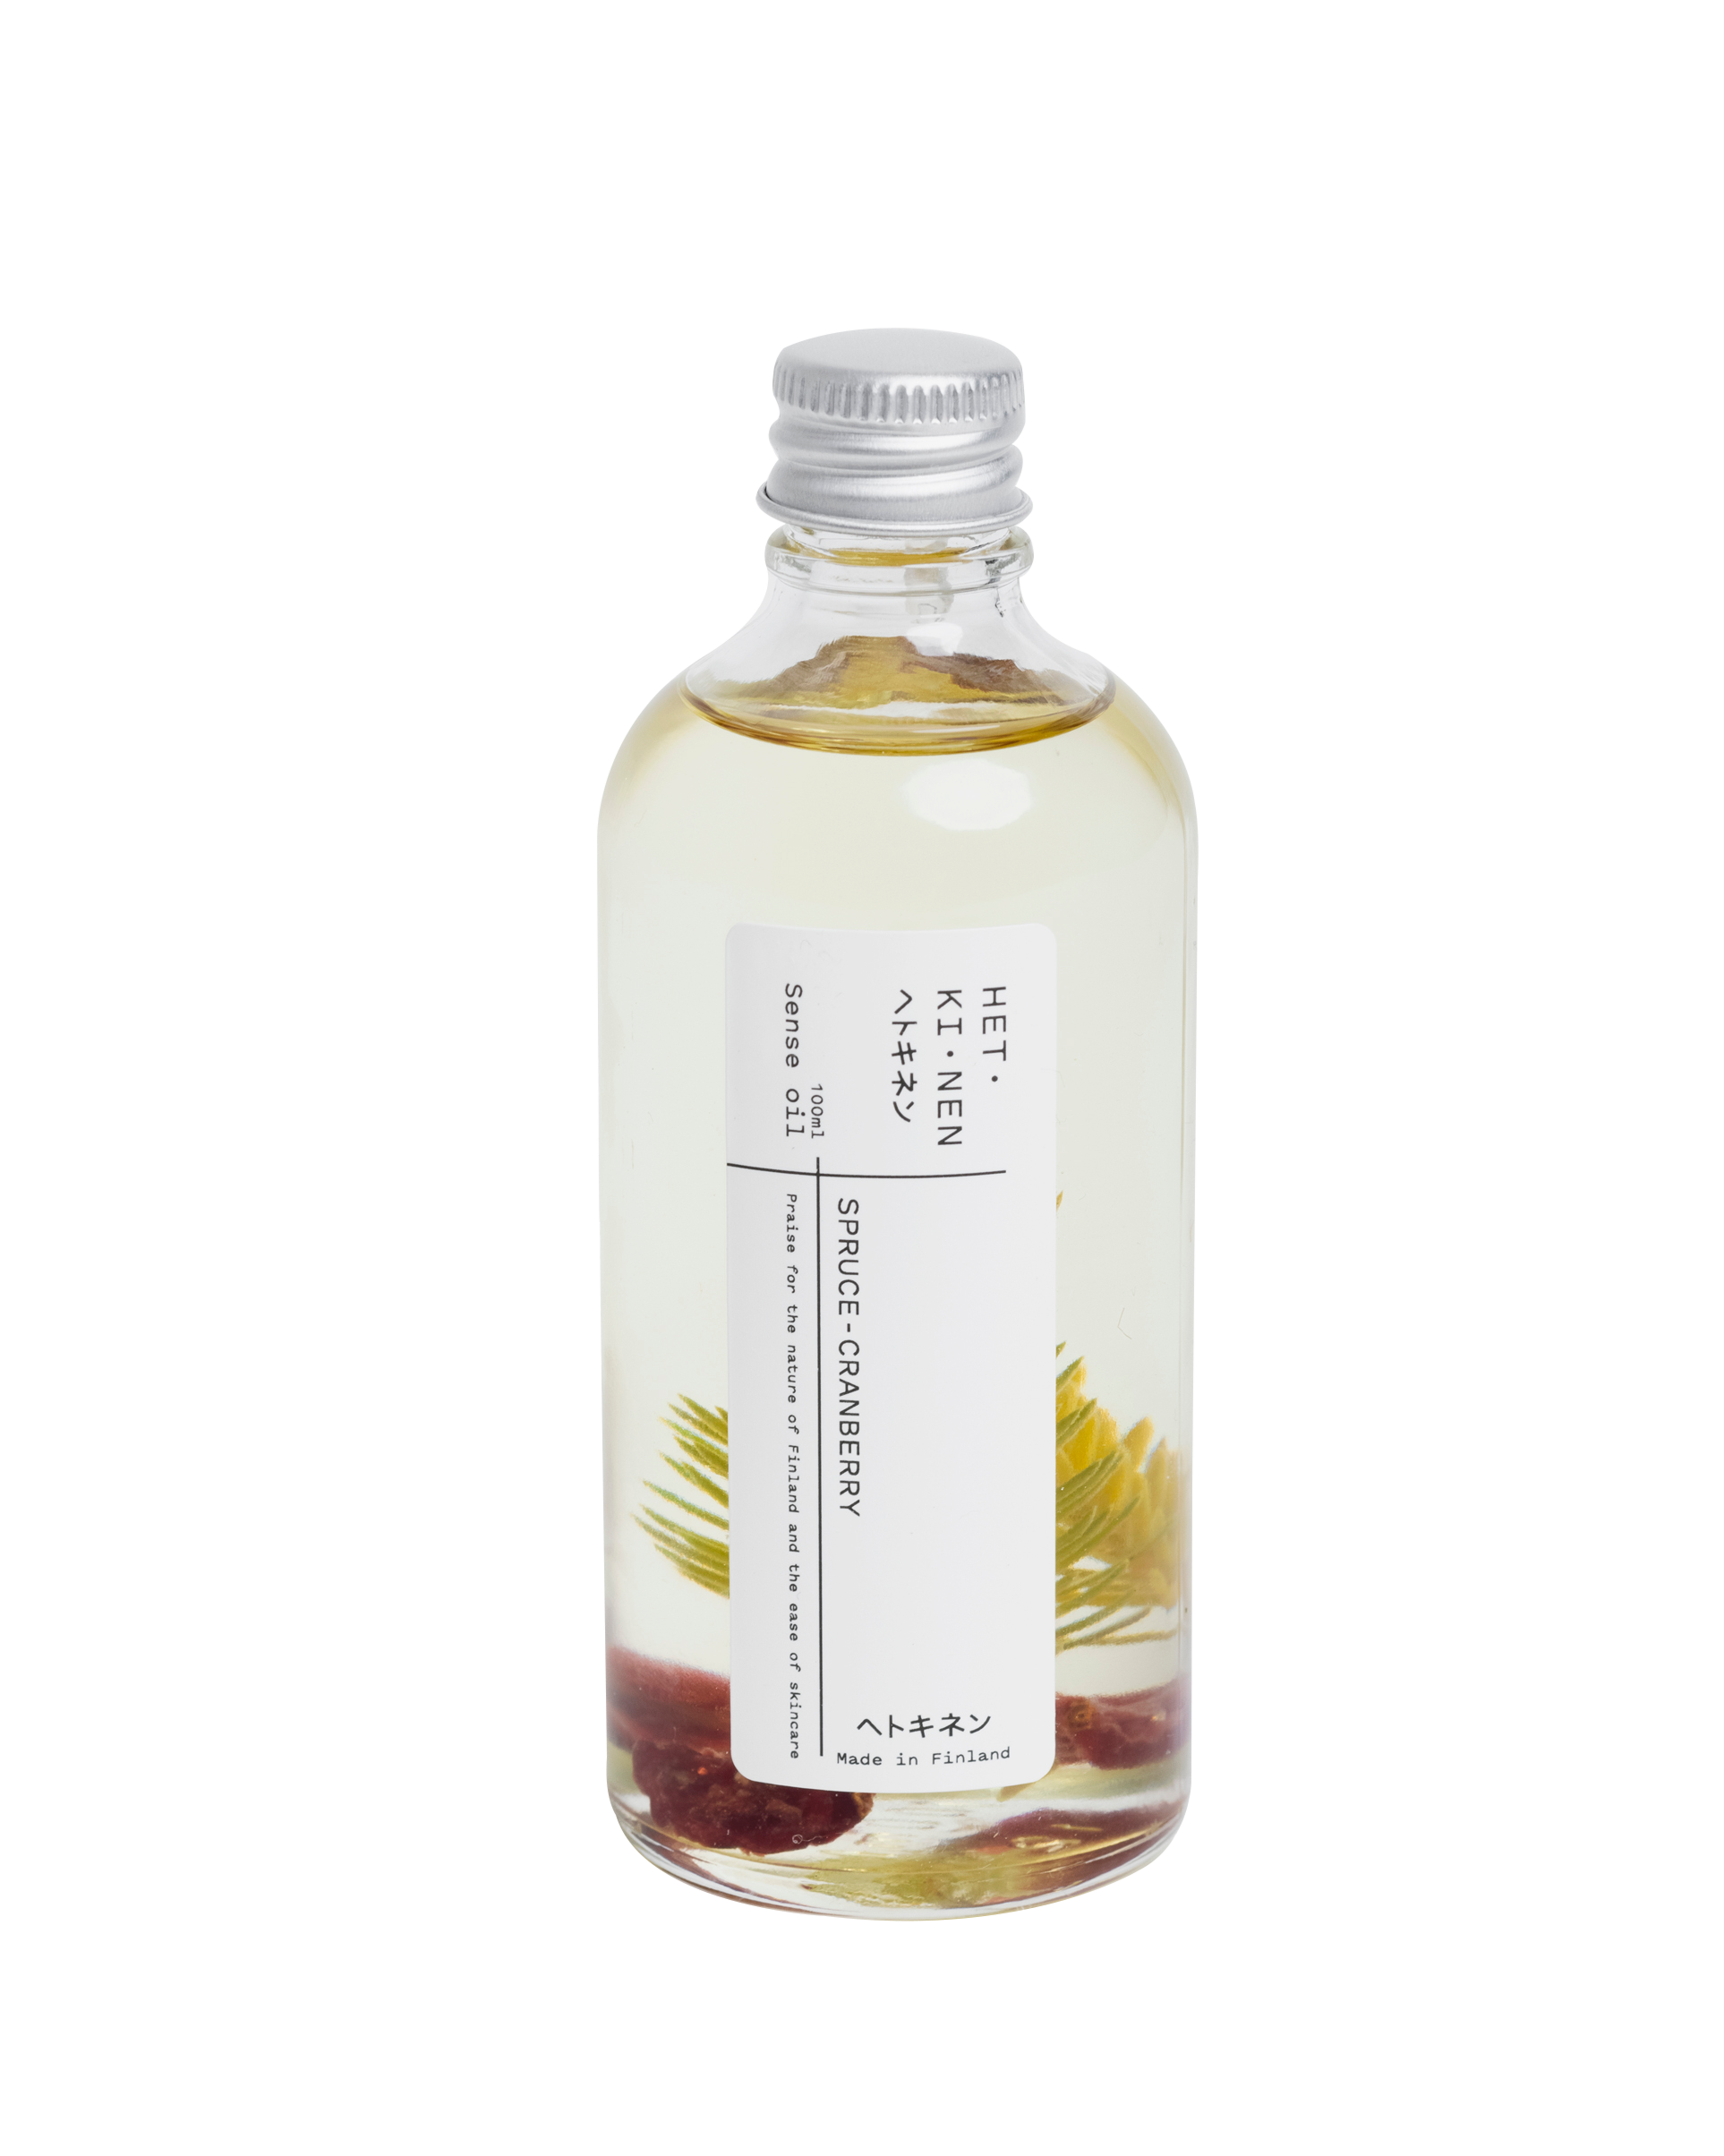 spruce-cranberry sense oil